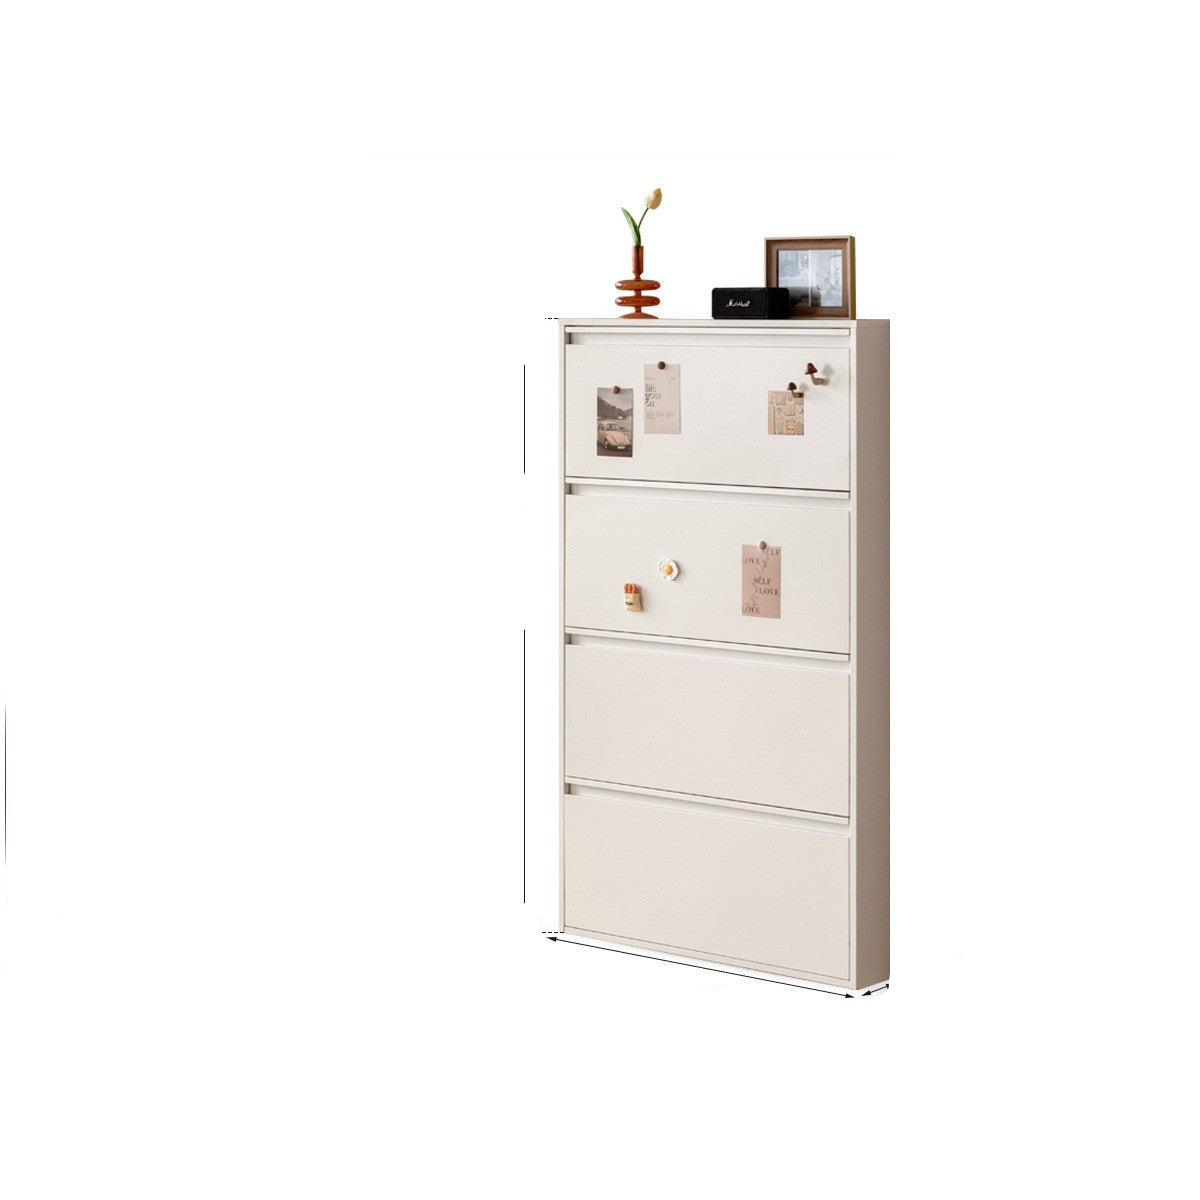 Metal ultra-thin shoe cabinet white modern